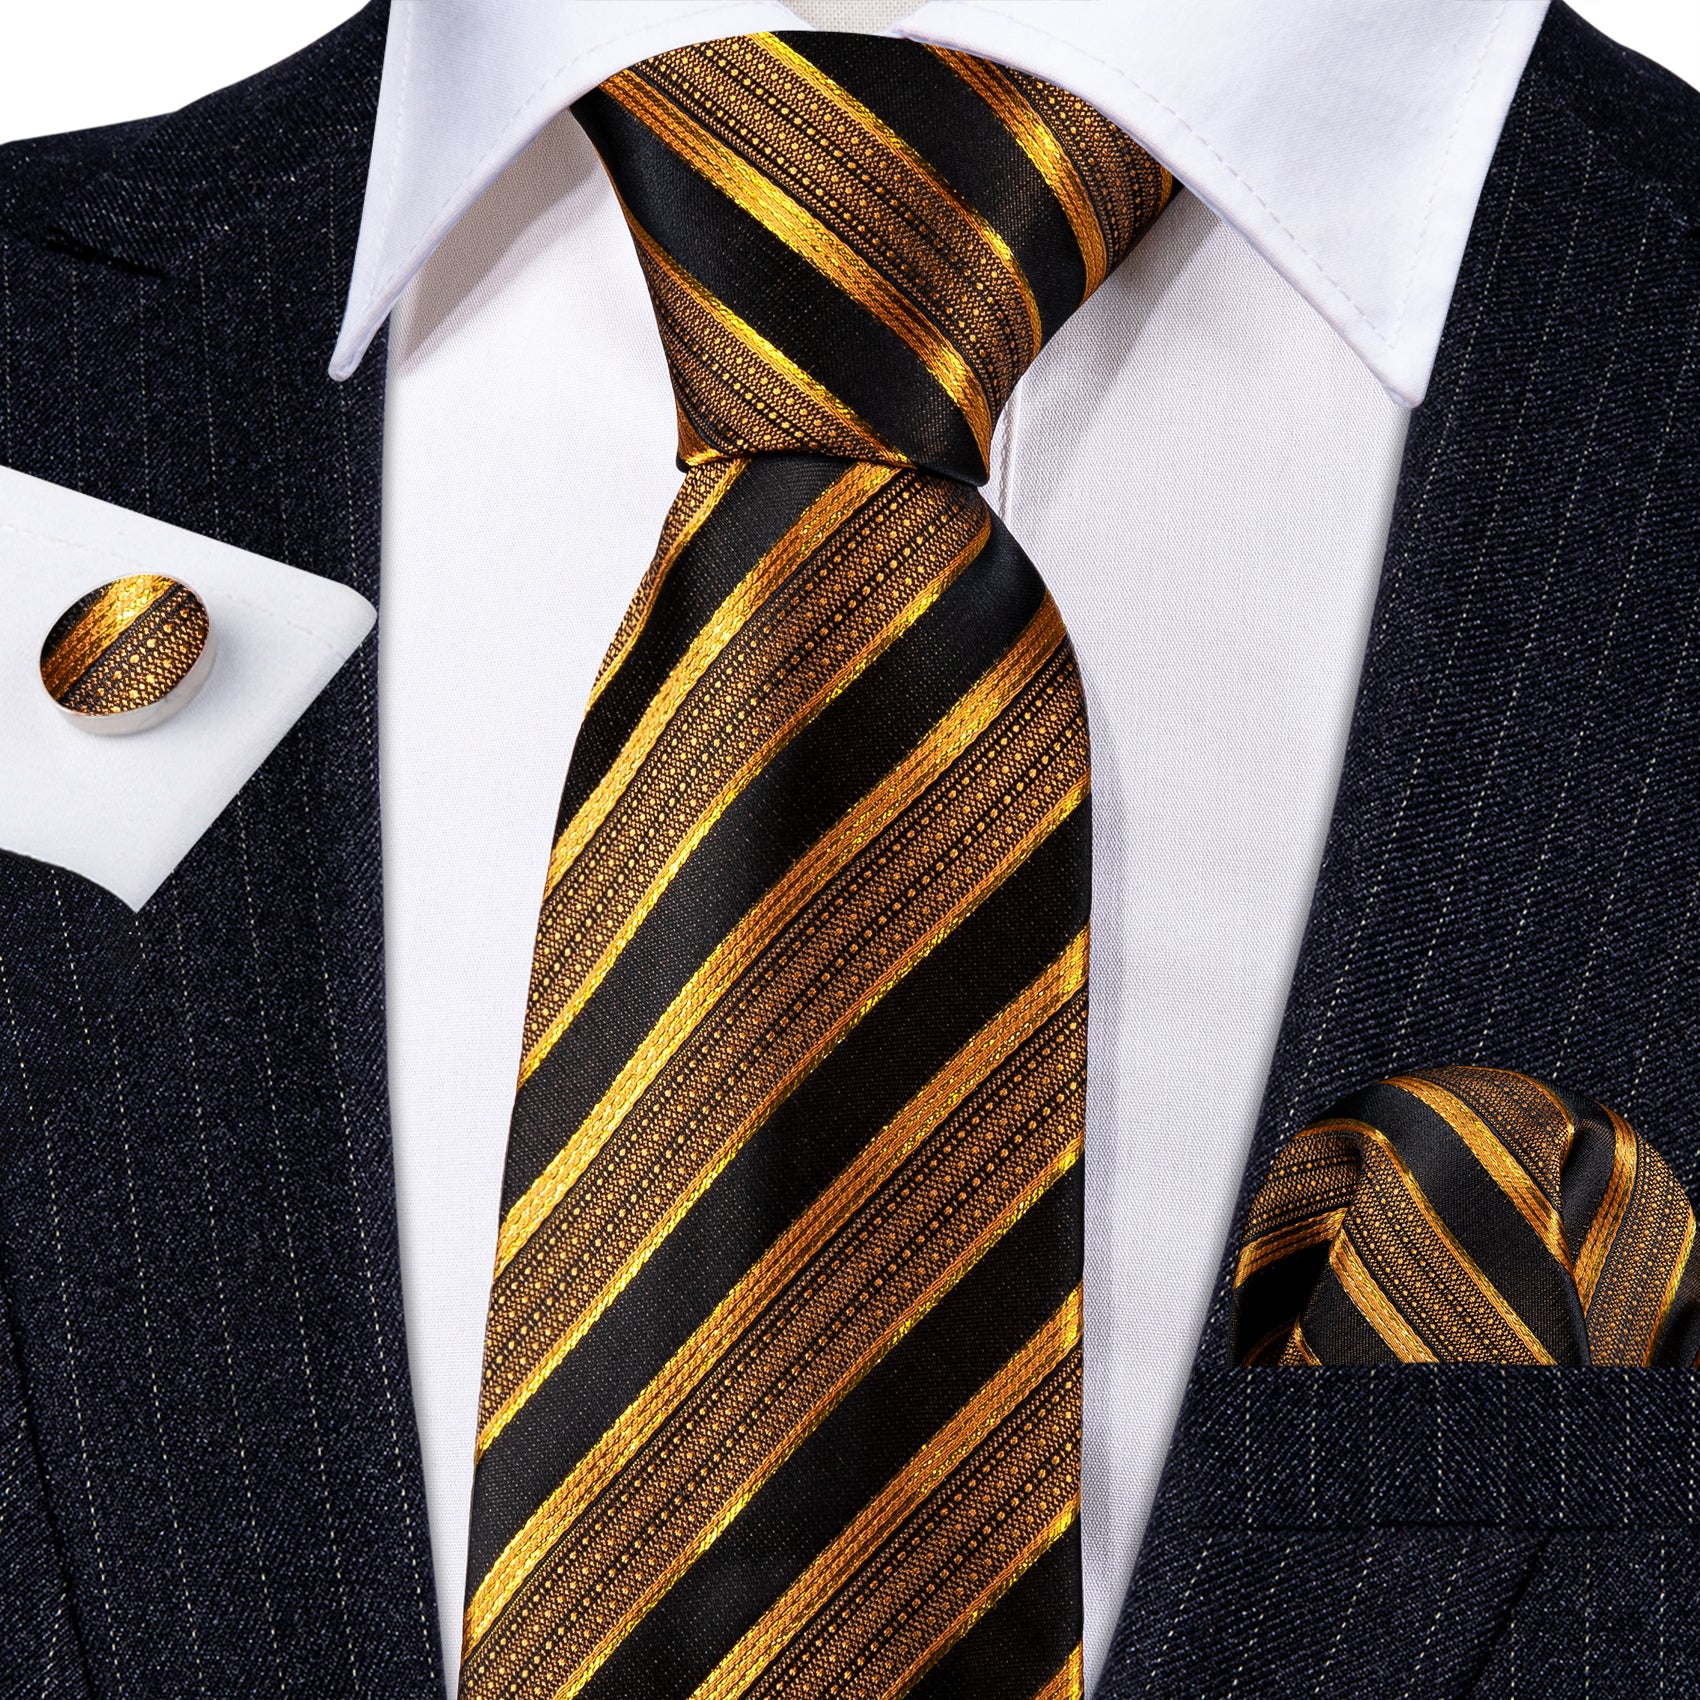 Barry.wang Black Tie Gold Striped Silk Tie Handkerchief Cufflinks Set